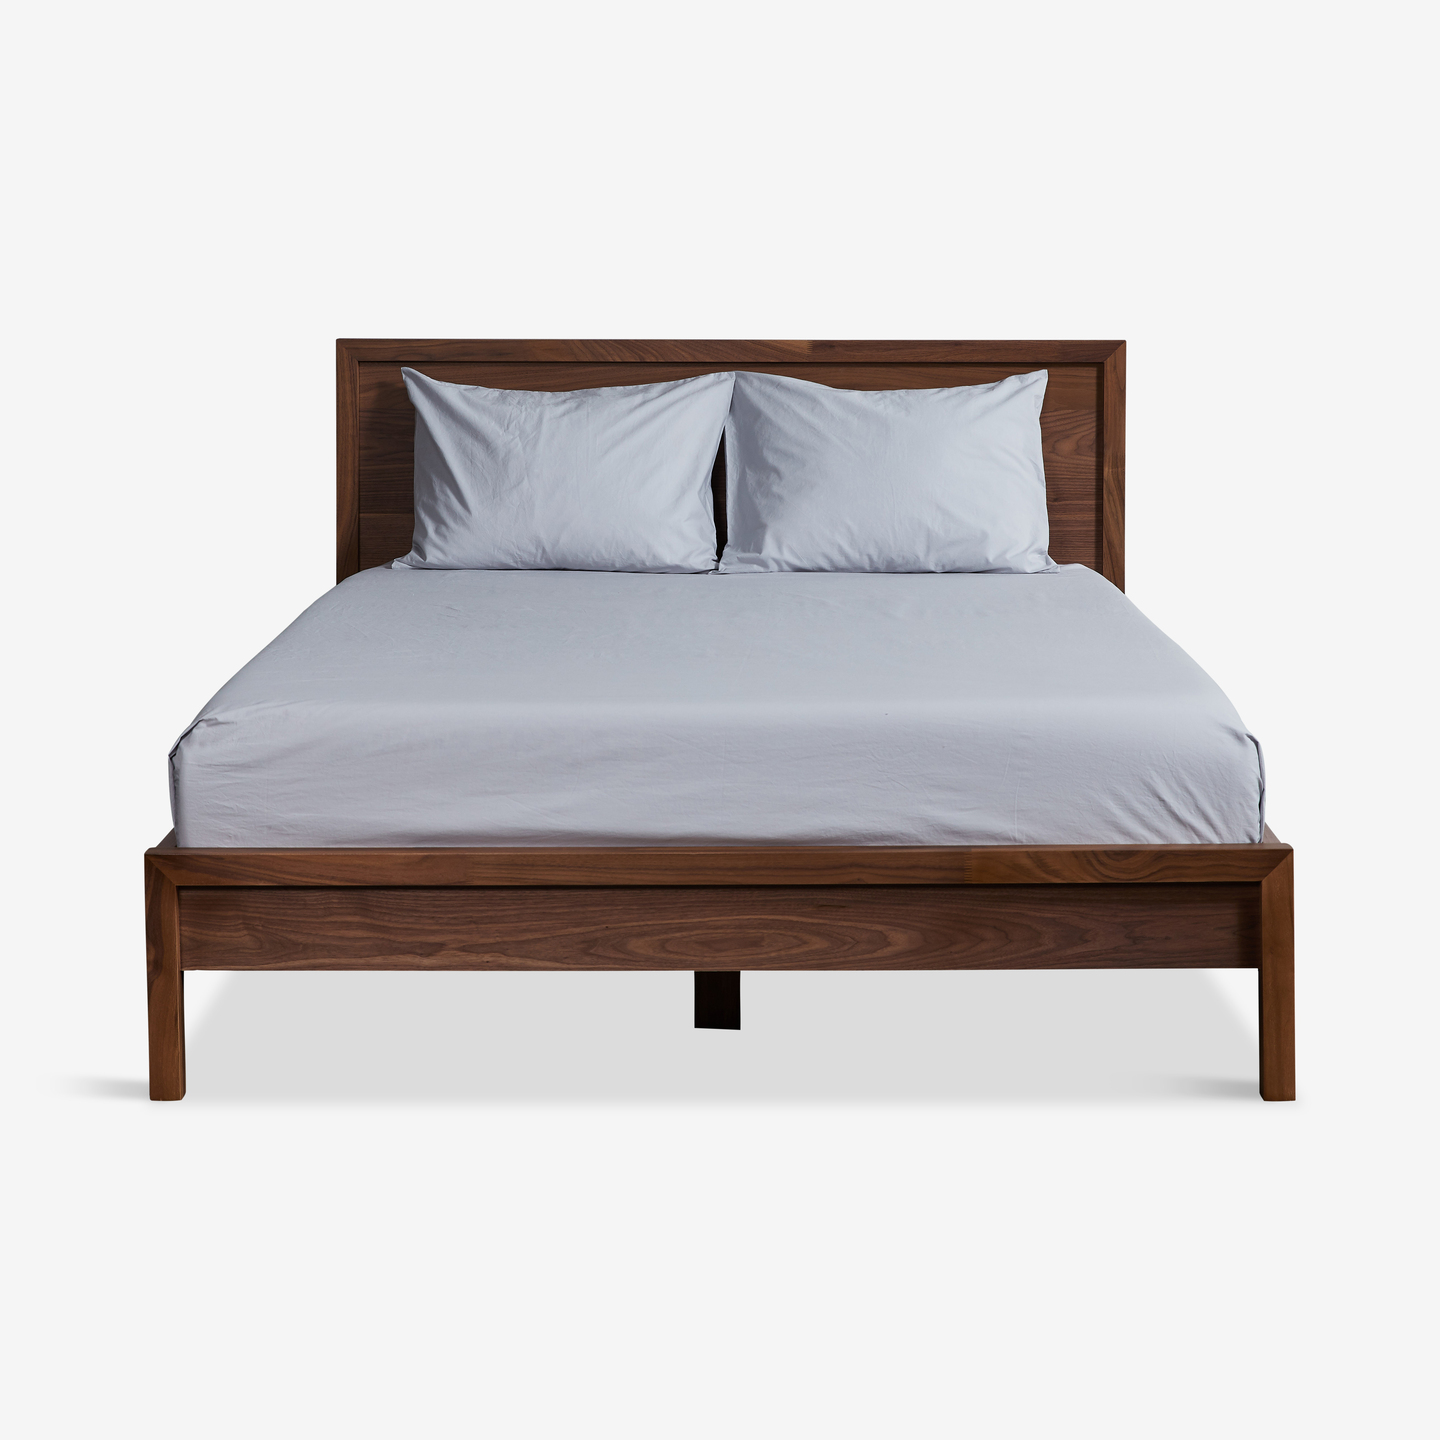 663_Marcel-Platform-Bed-Queen_Flat-Frontbed-made-No-Duvet_California-Chic_Bedroom-11 2020